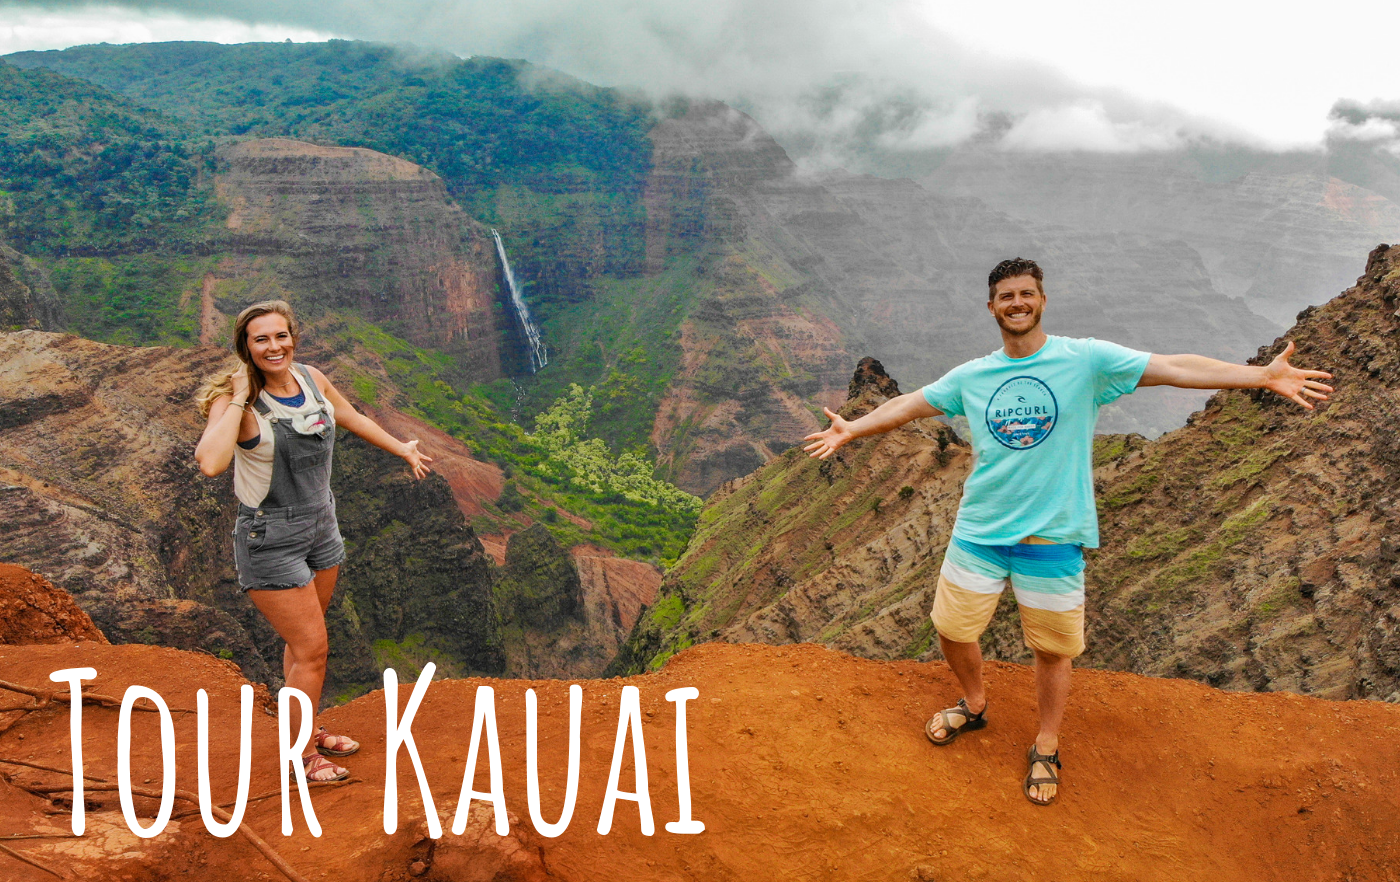 Tour Kauai